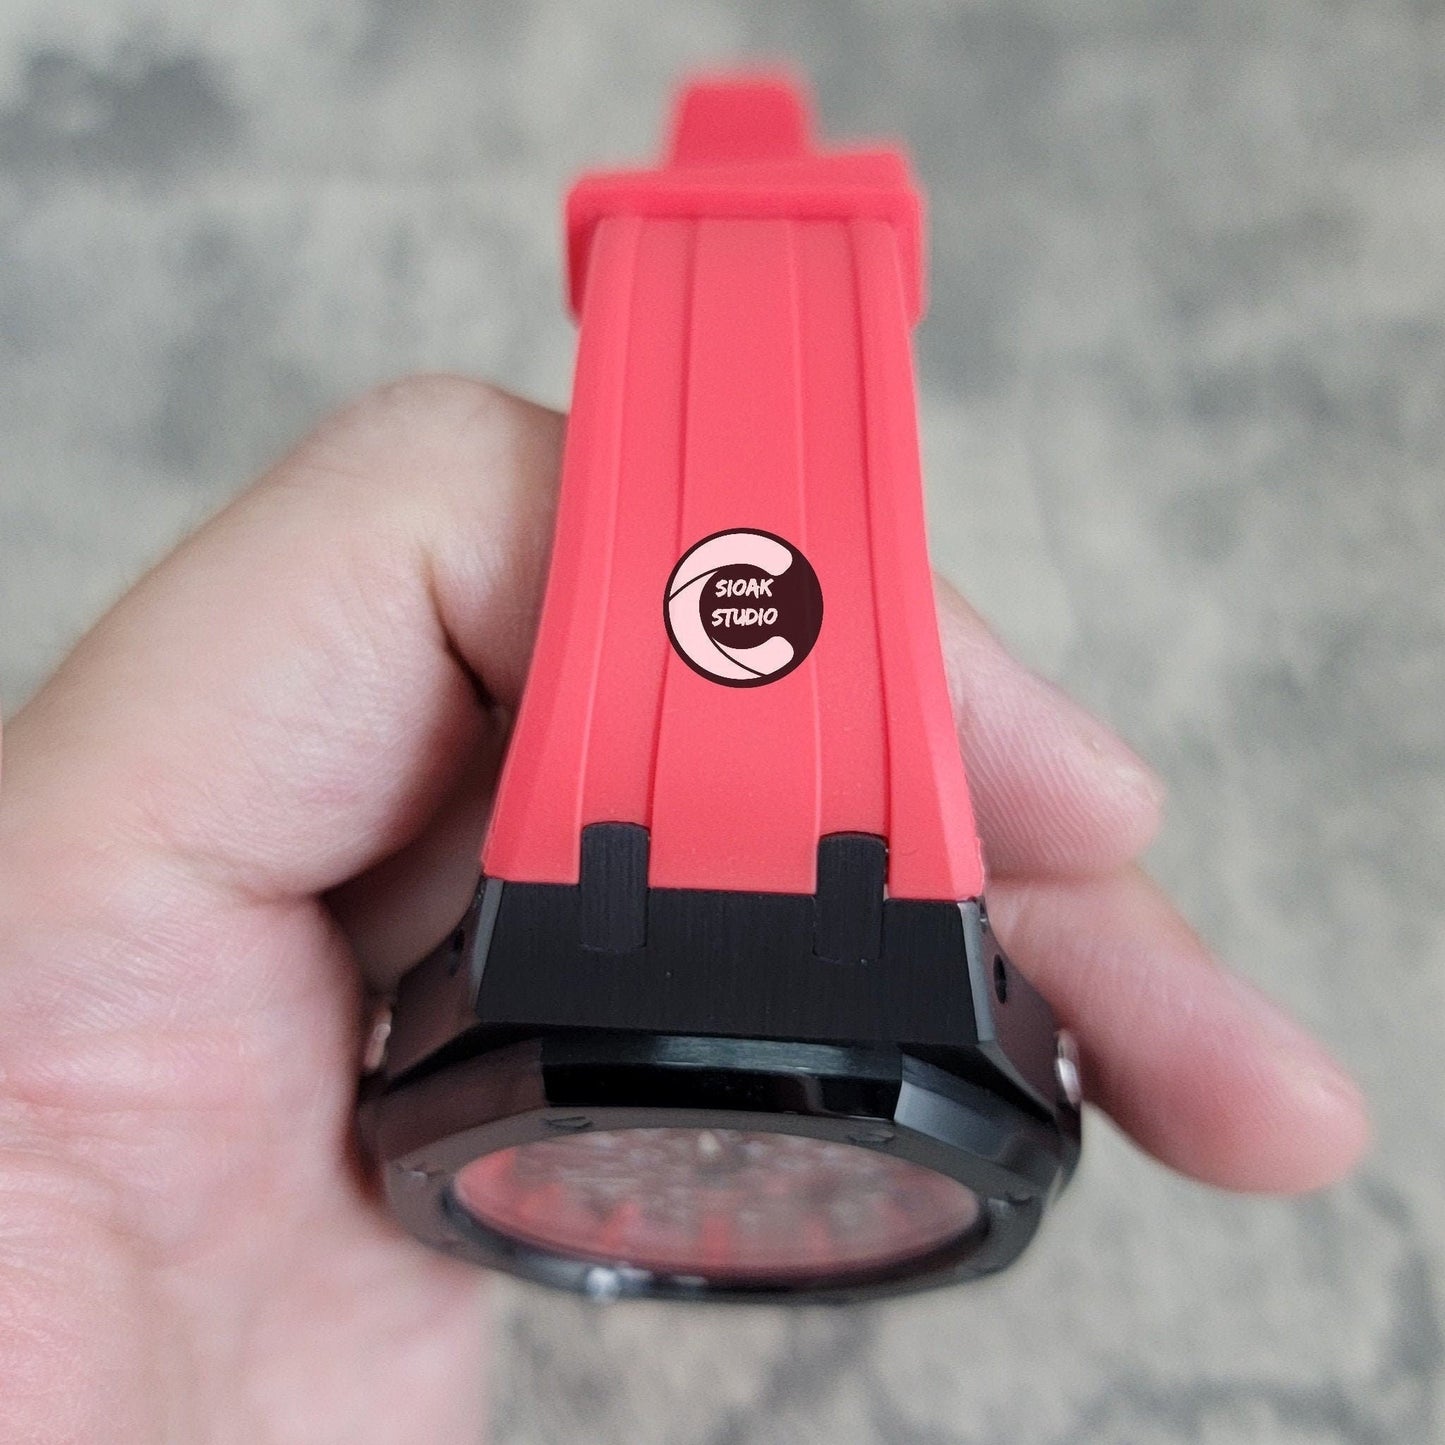 Casioak Mod Watch Black Case Red Rubber Strap Red Time Mark Red Dial 44mm - Casioak Studio